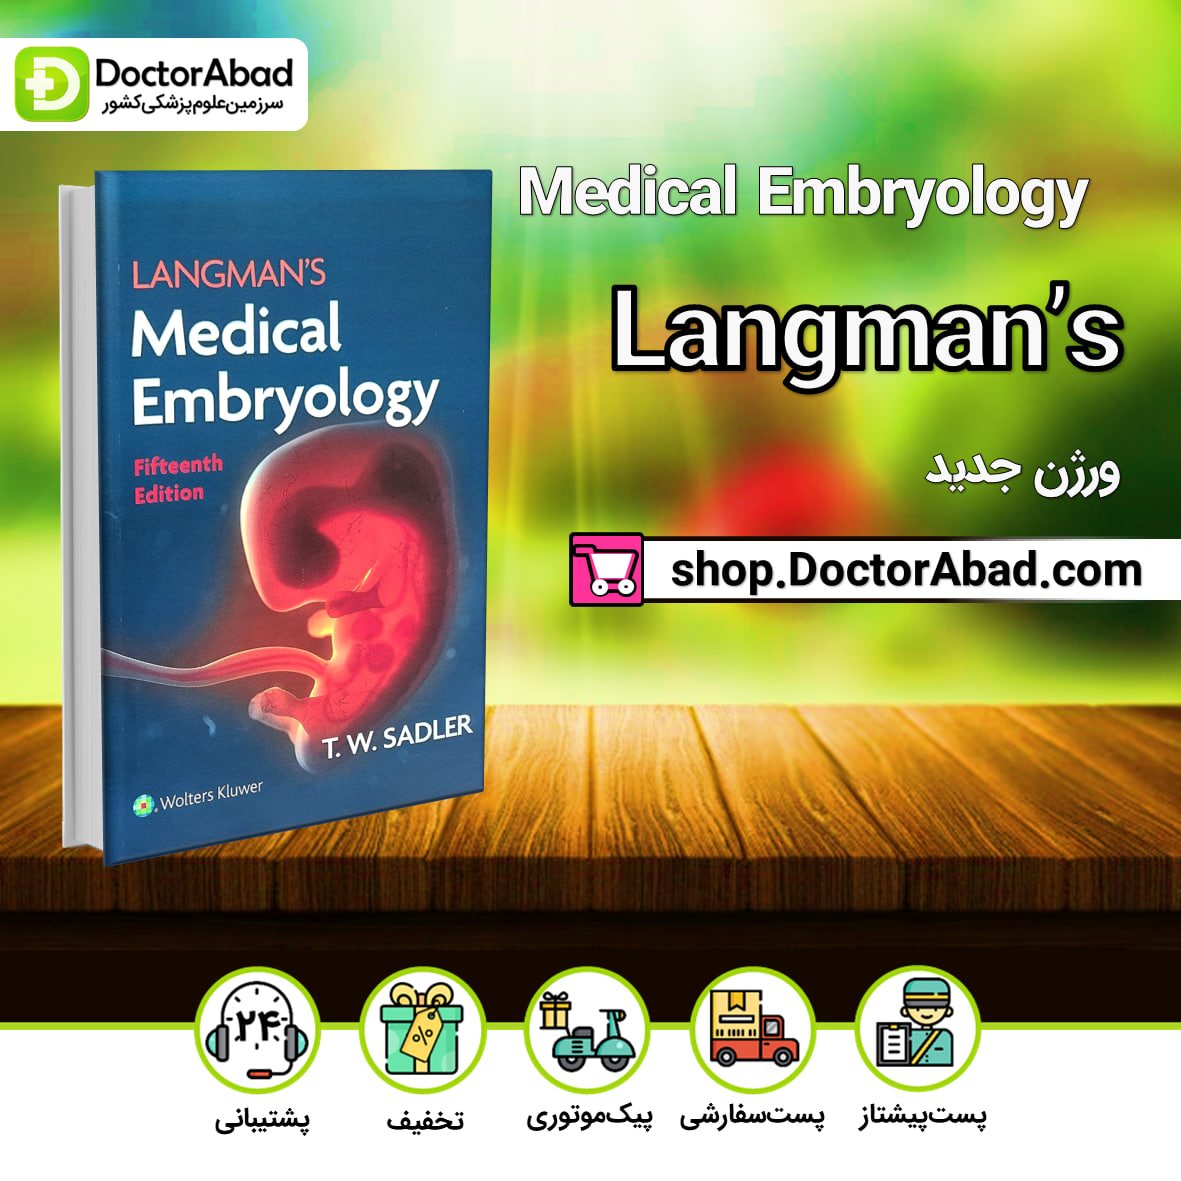 Langman's Medical Embryology fifteenth